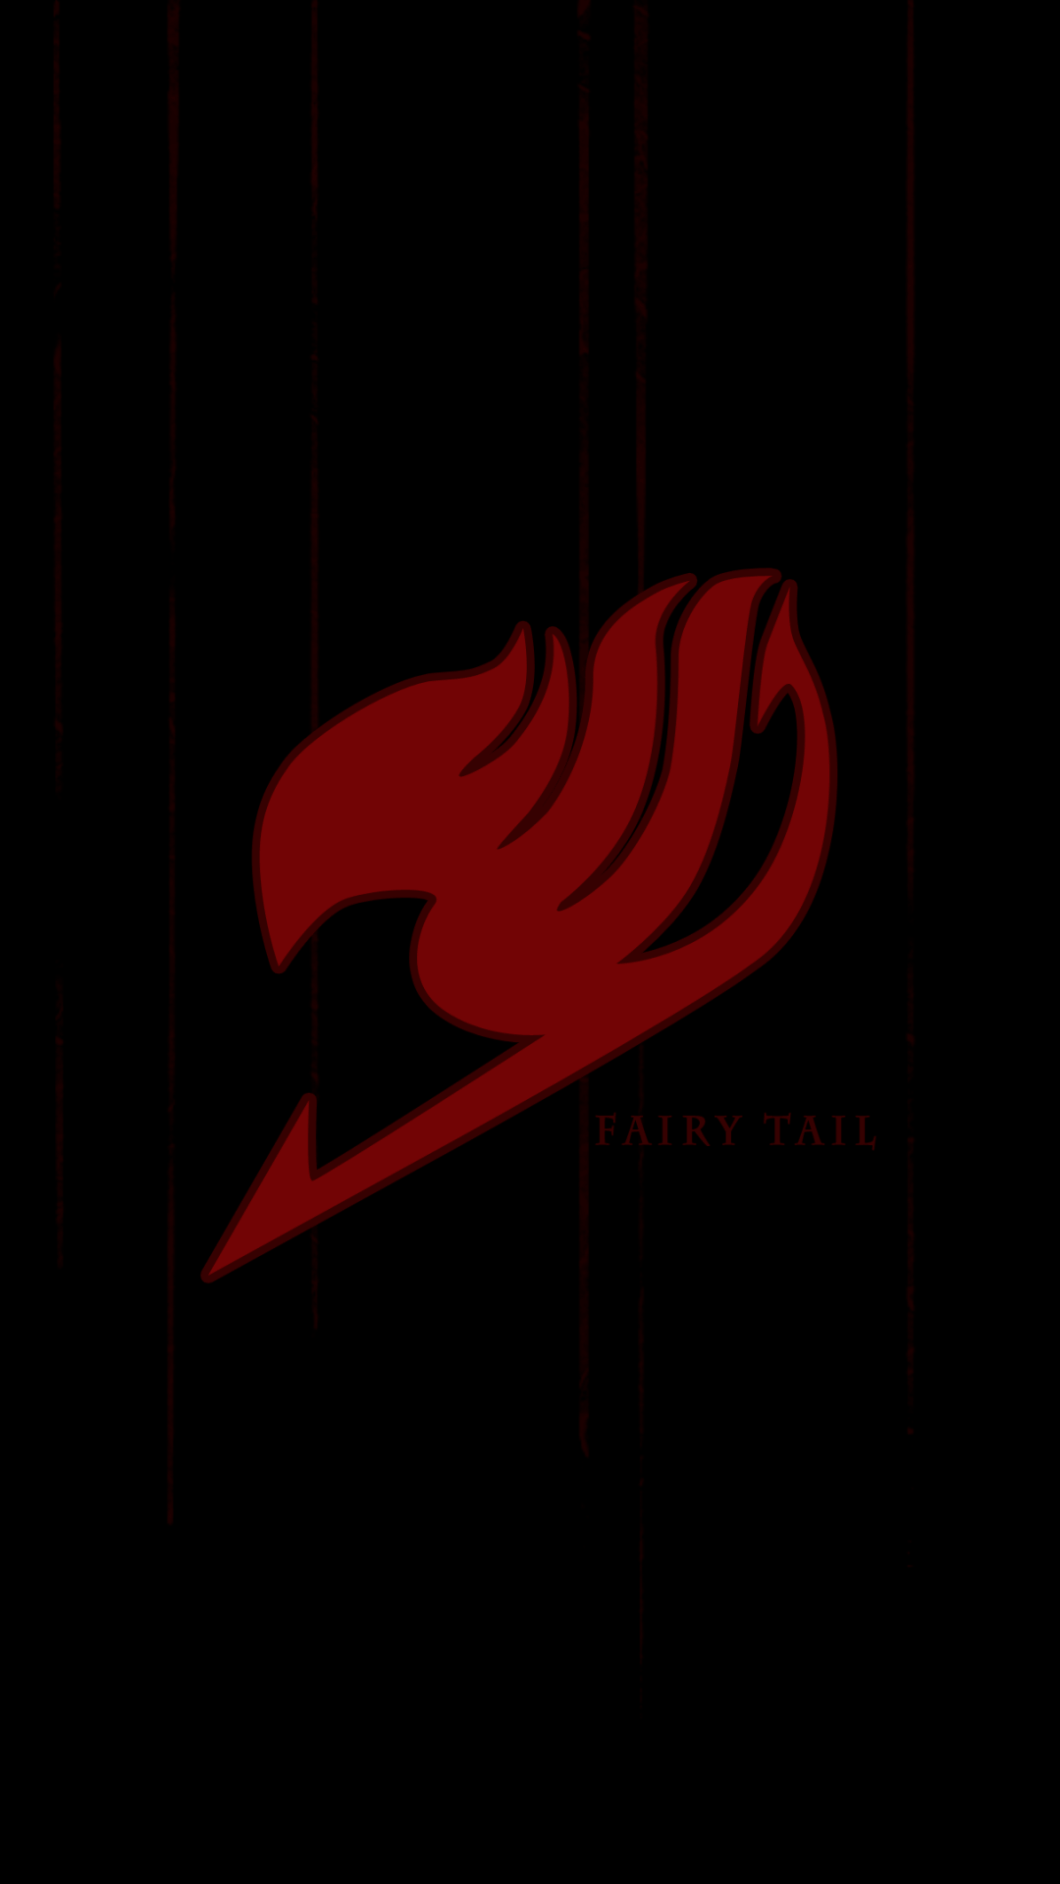 Fairy Tail Logo iPhone 5 Wallpaper